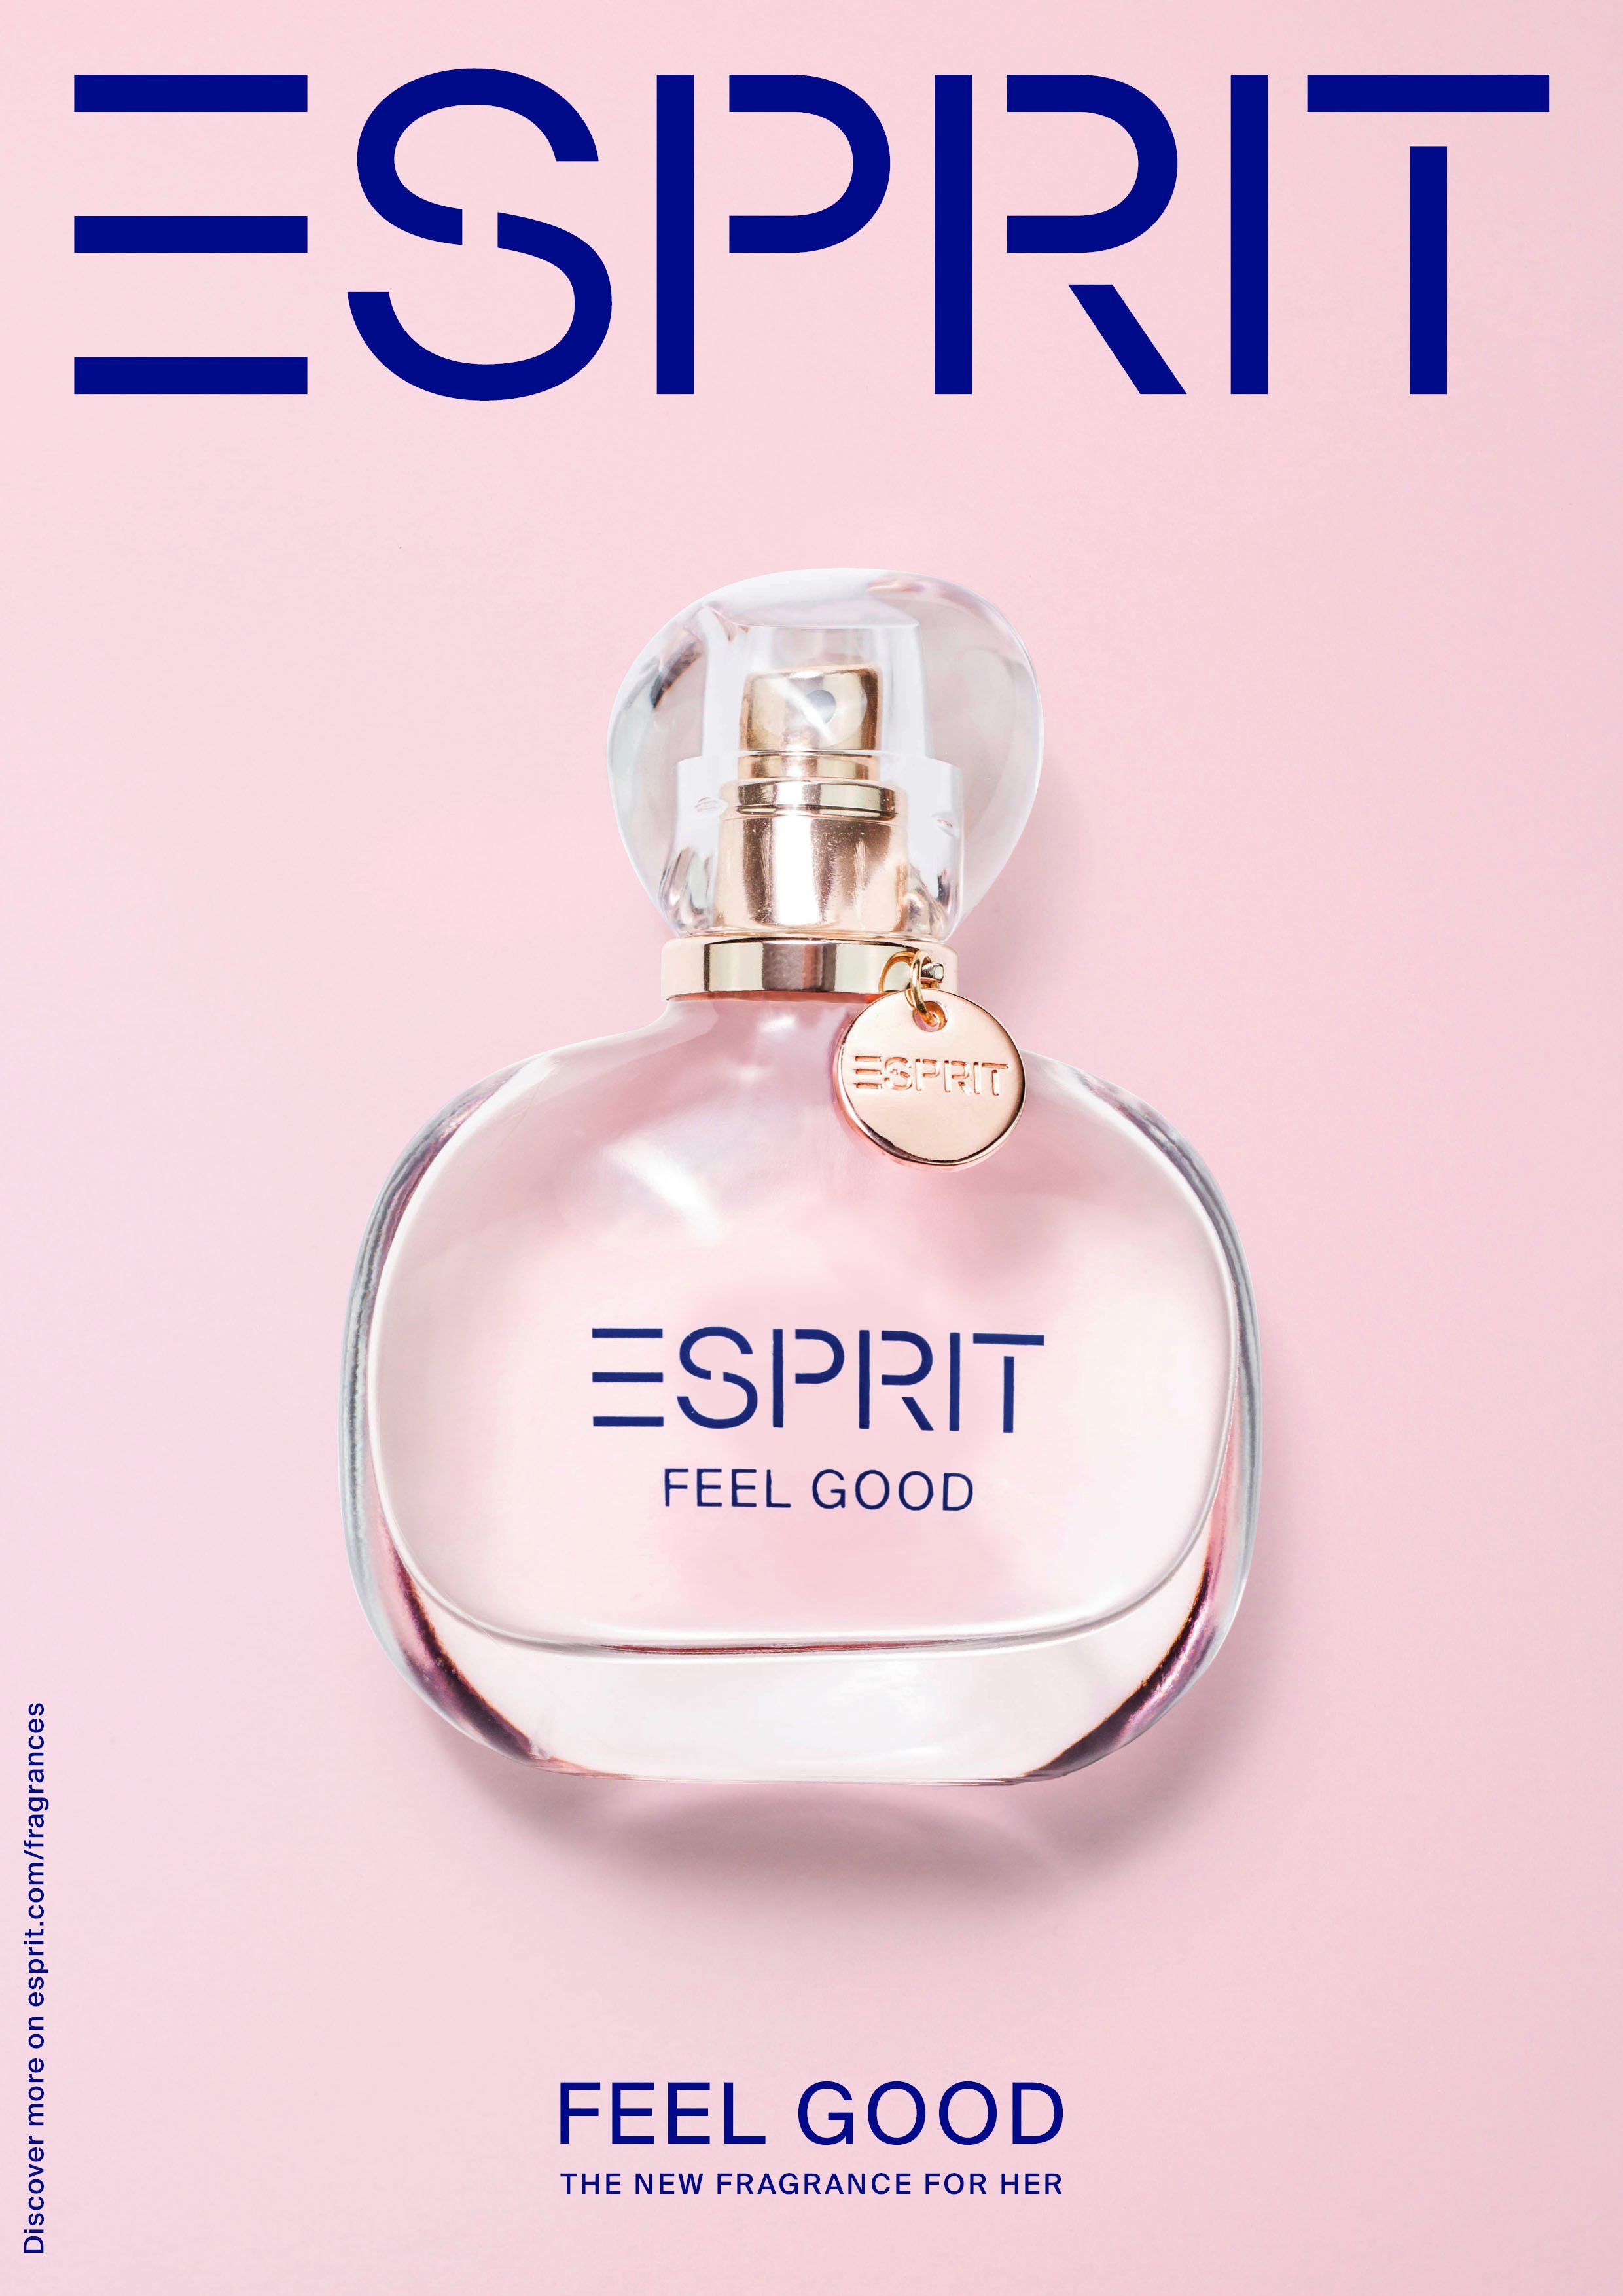 Esprit Eau de Parfum FEEL for GOOD her 20 ml EdP